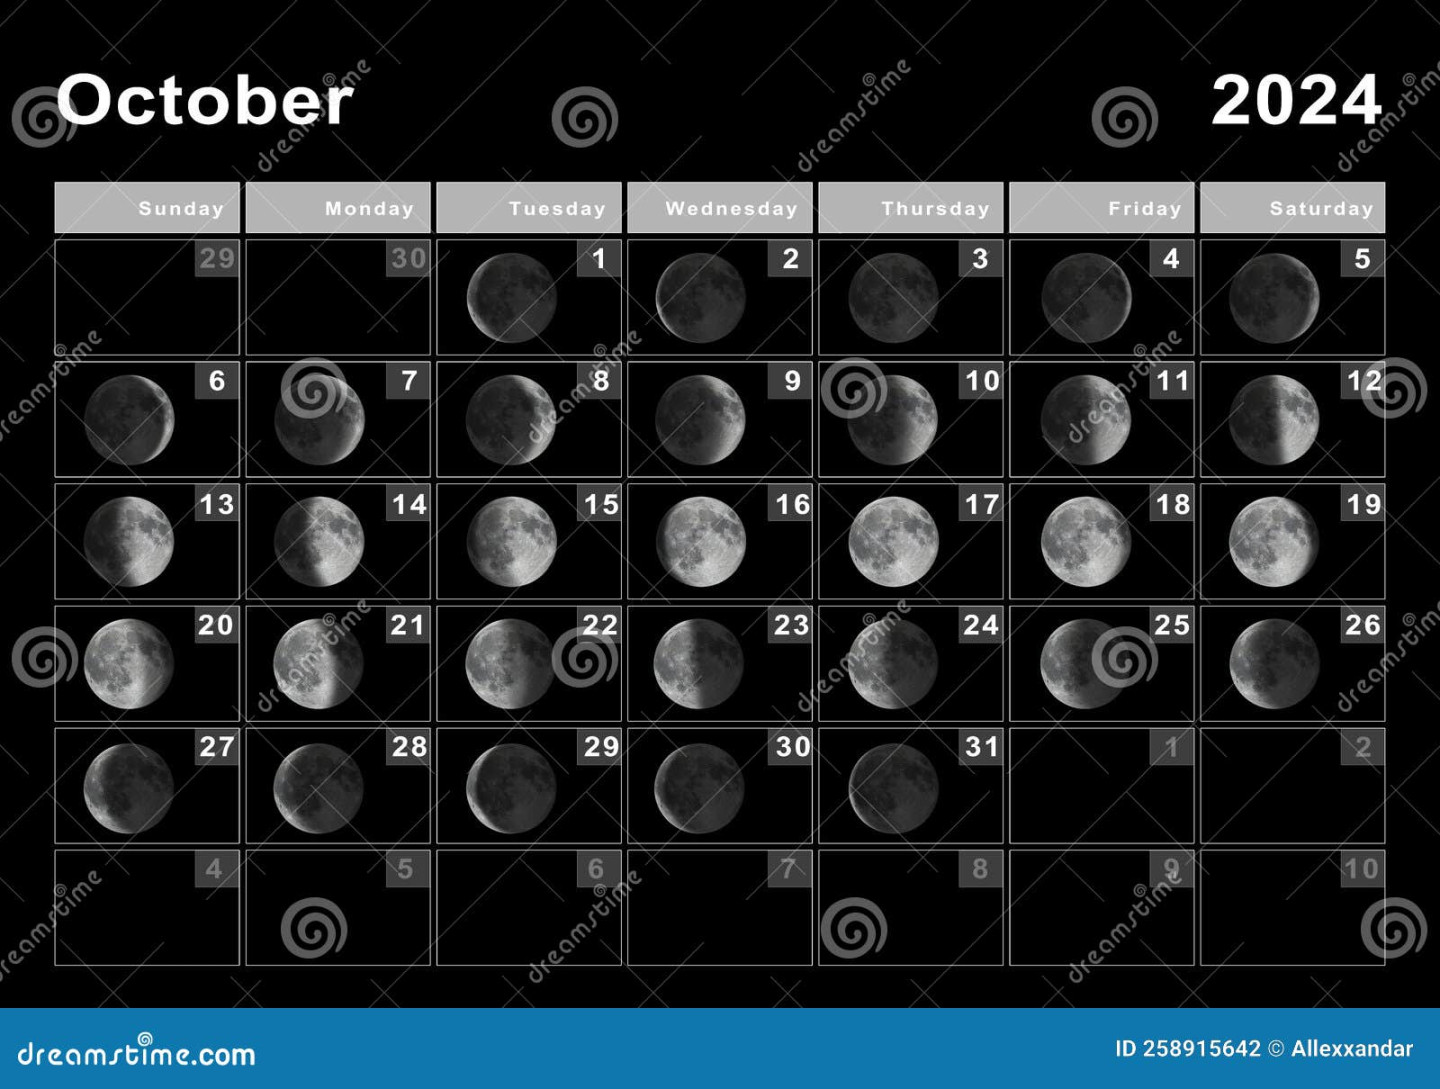 October  Lunar Calendar, Moon Cycles Stock Illustration